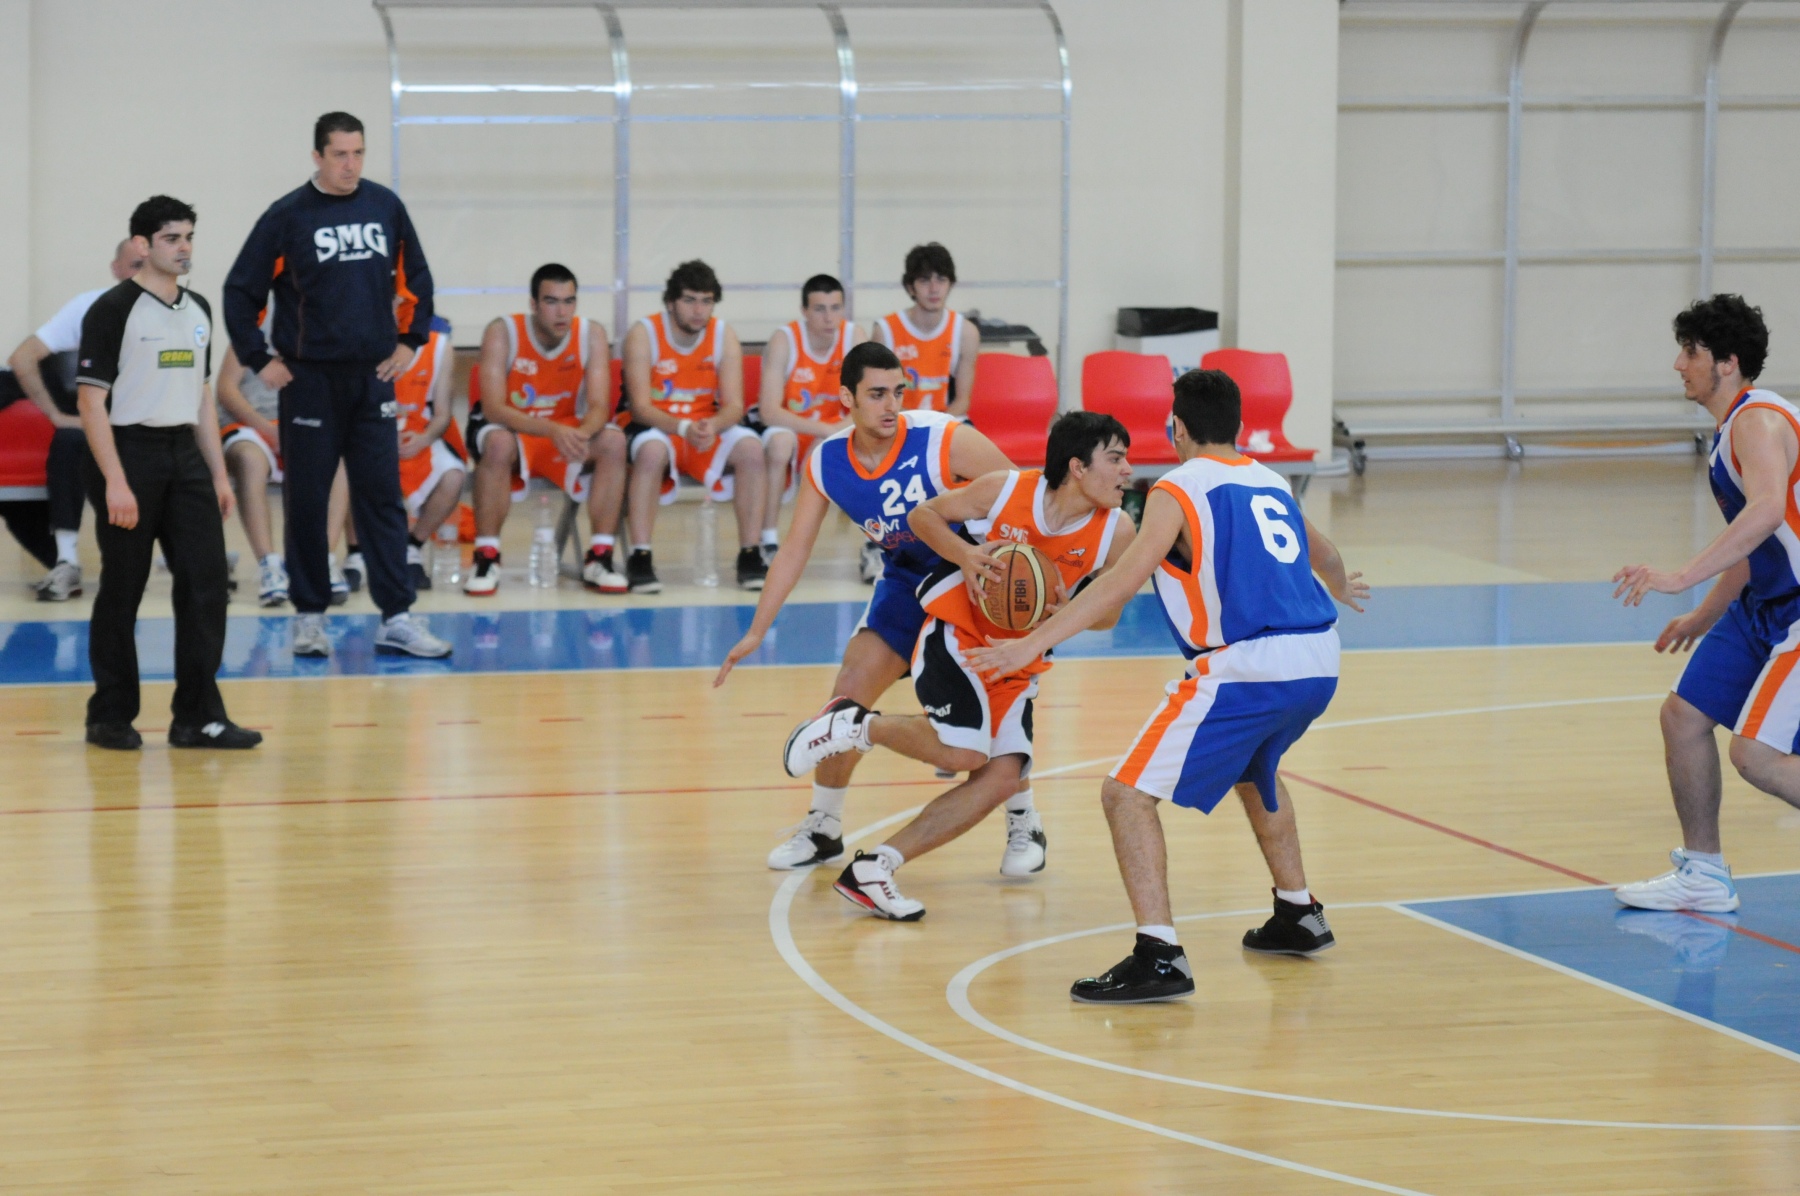 2010-05-23-SMG-Vivibasket-Napoli-423